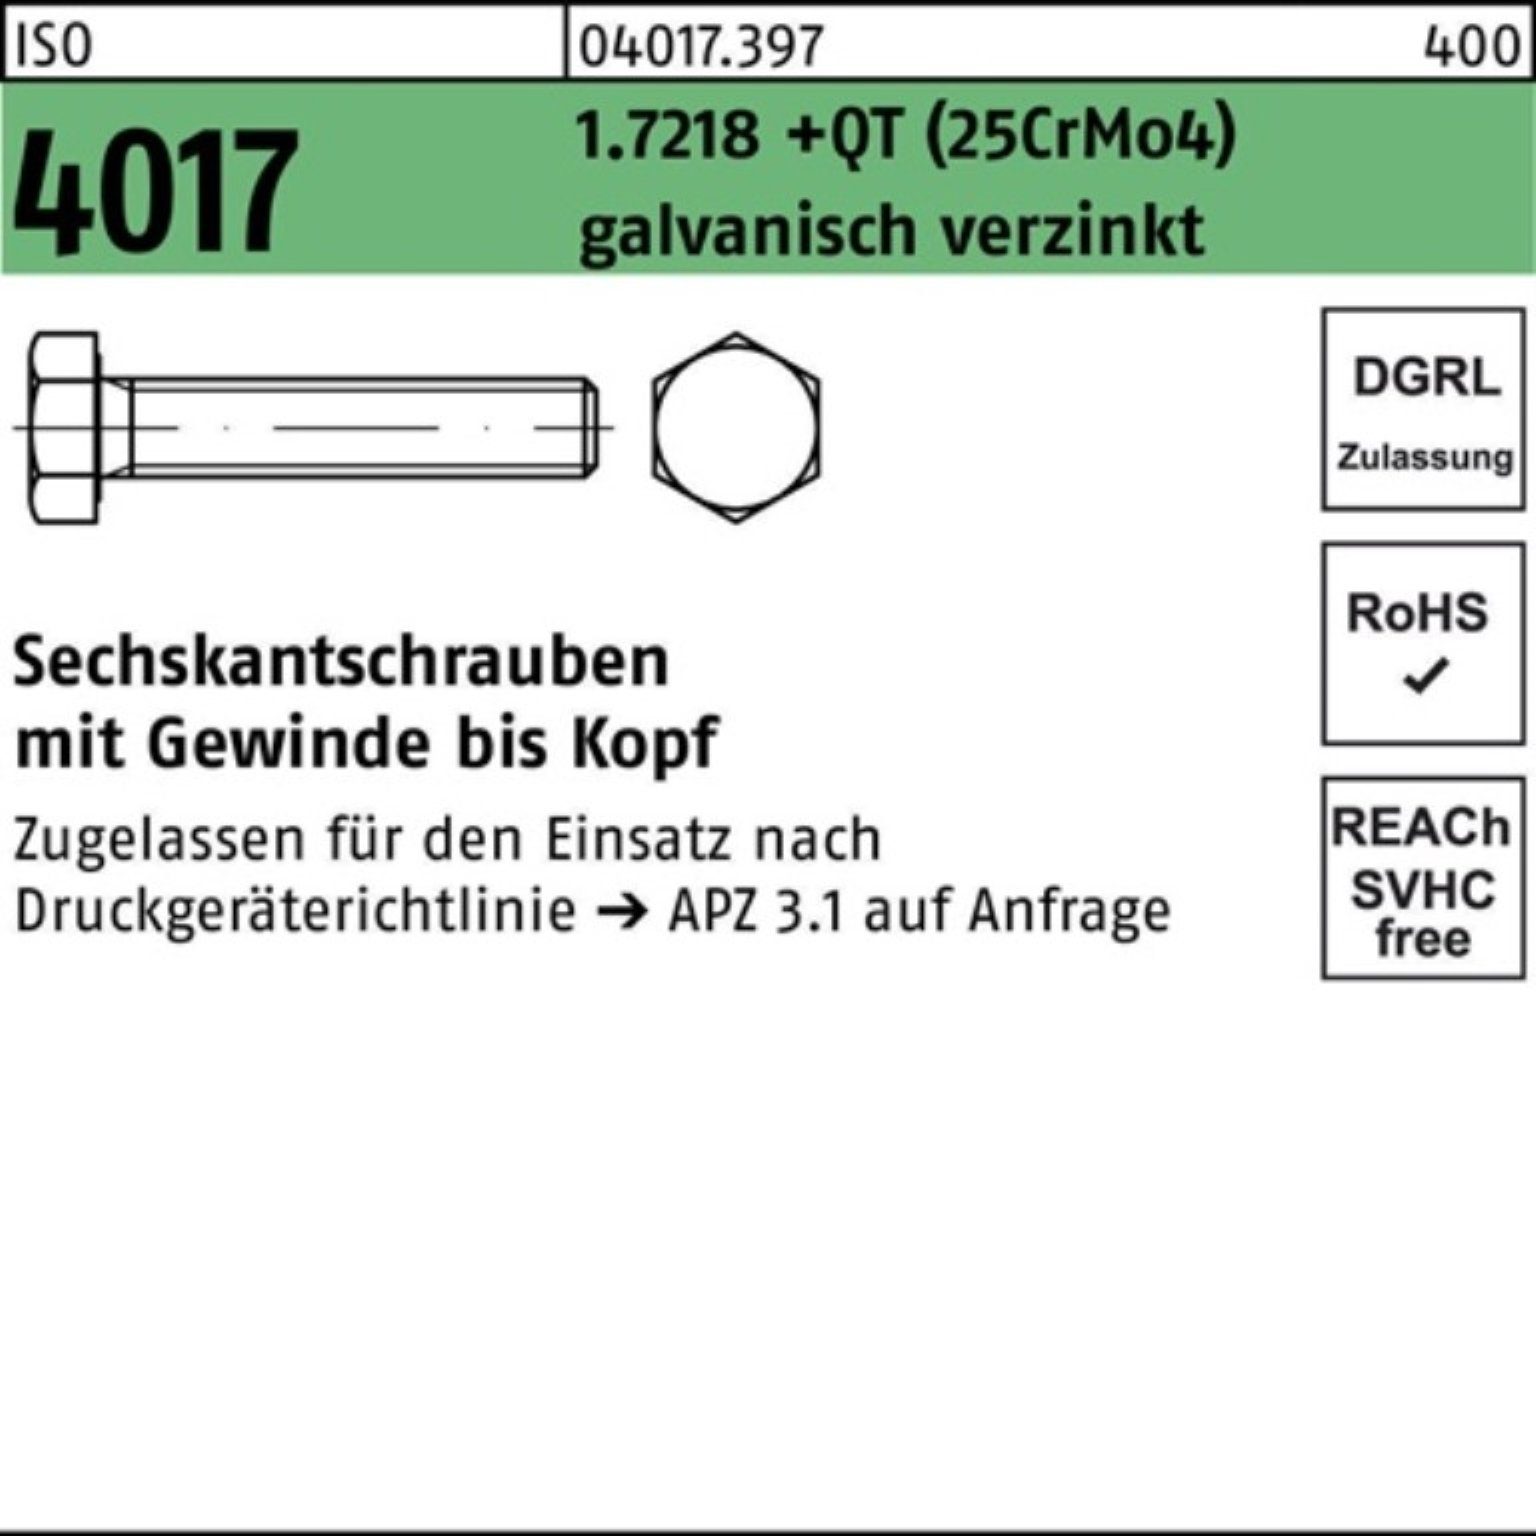 Bufab Sechskantschraube 100er Pack (25CrMo4) VG 4017 +QT M16x120 Sechskantschraube ISO 1.7218